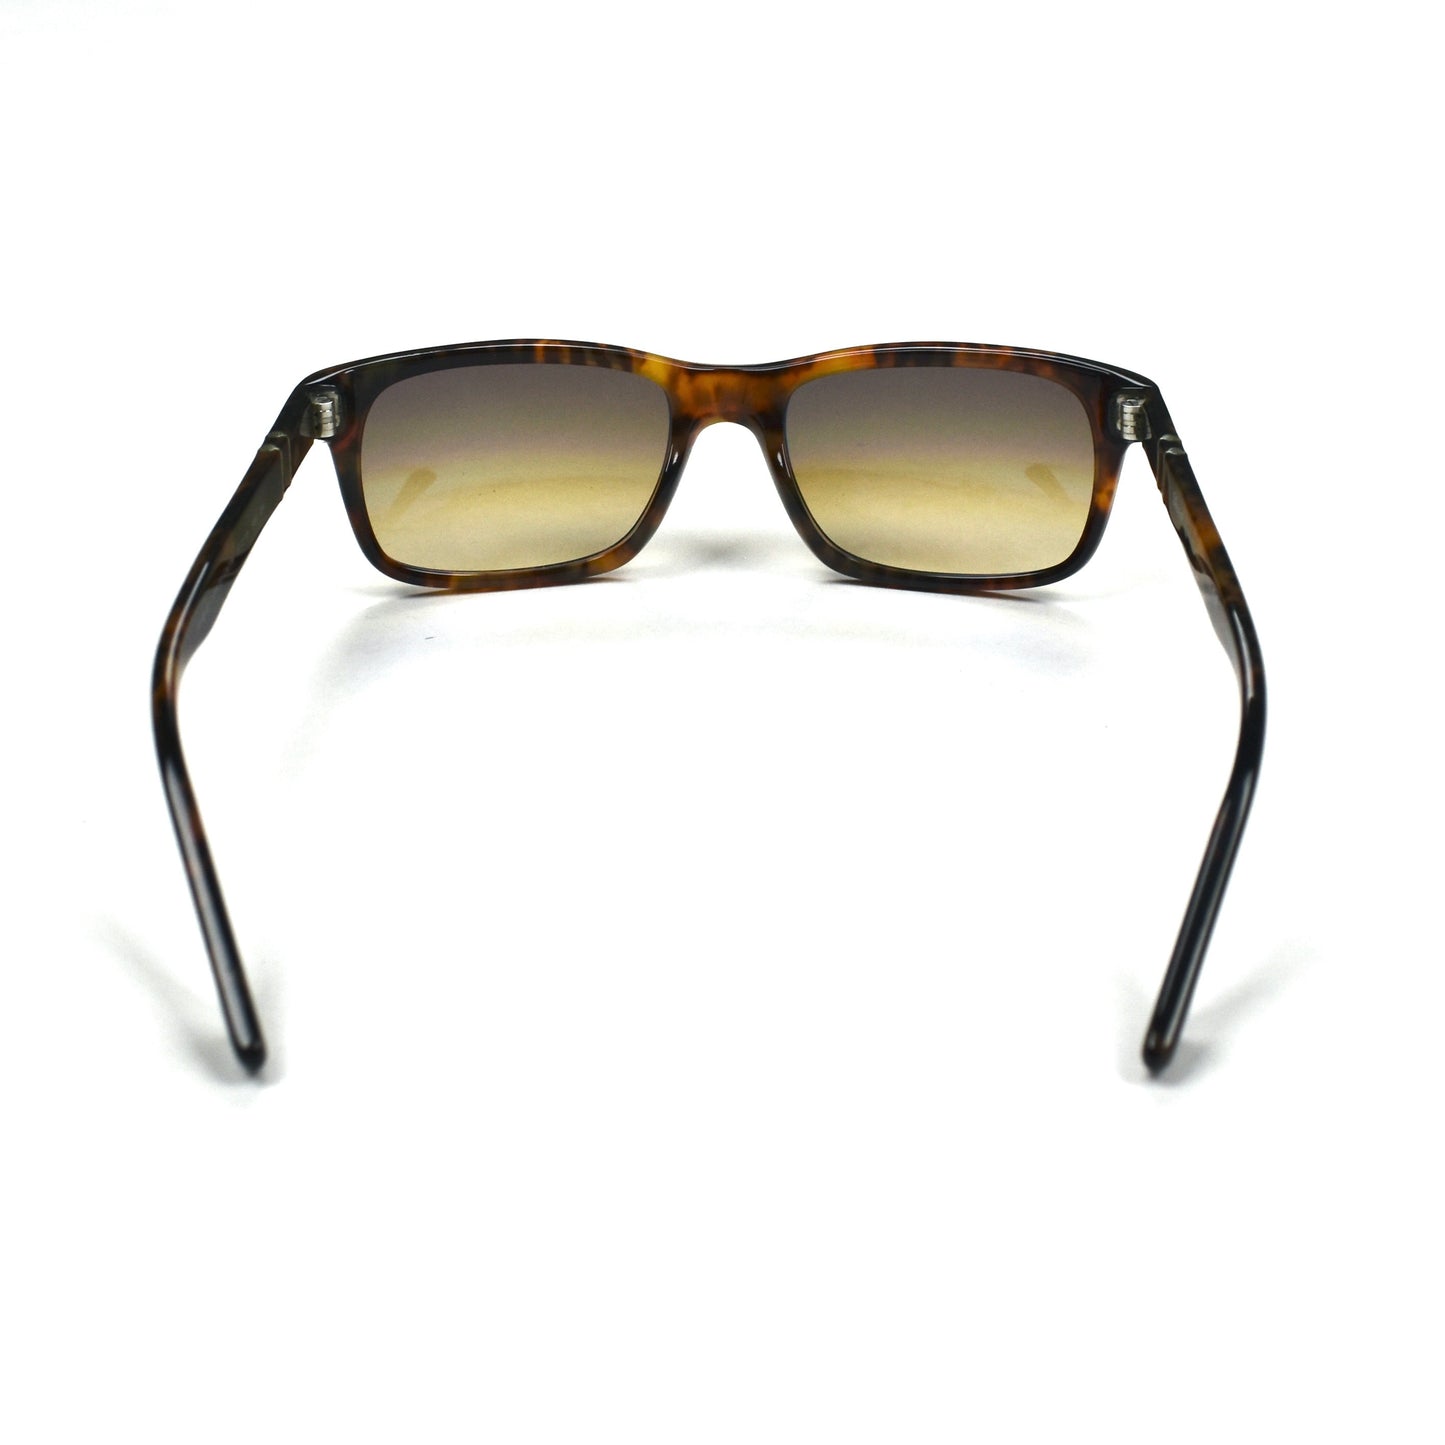 Persol - 3048-S Wayfarer Tortoise / Caffe Gradient Lens Sunglasses